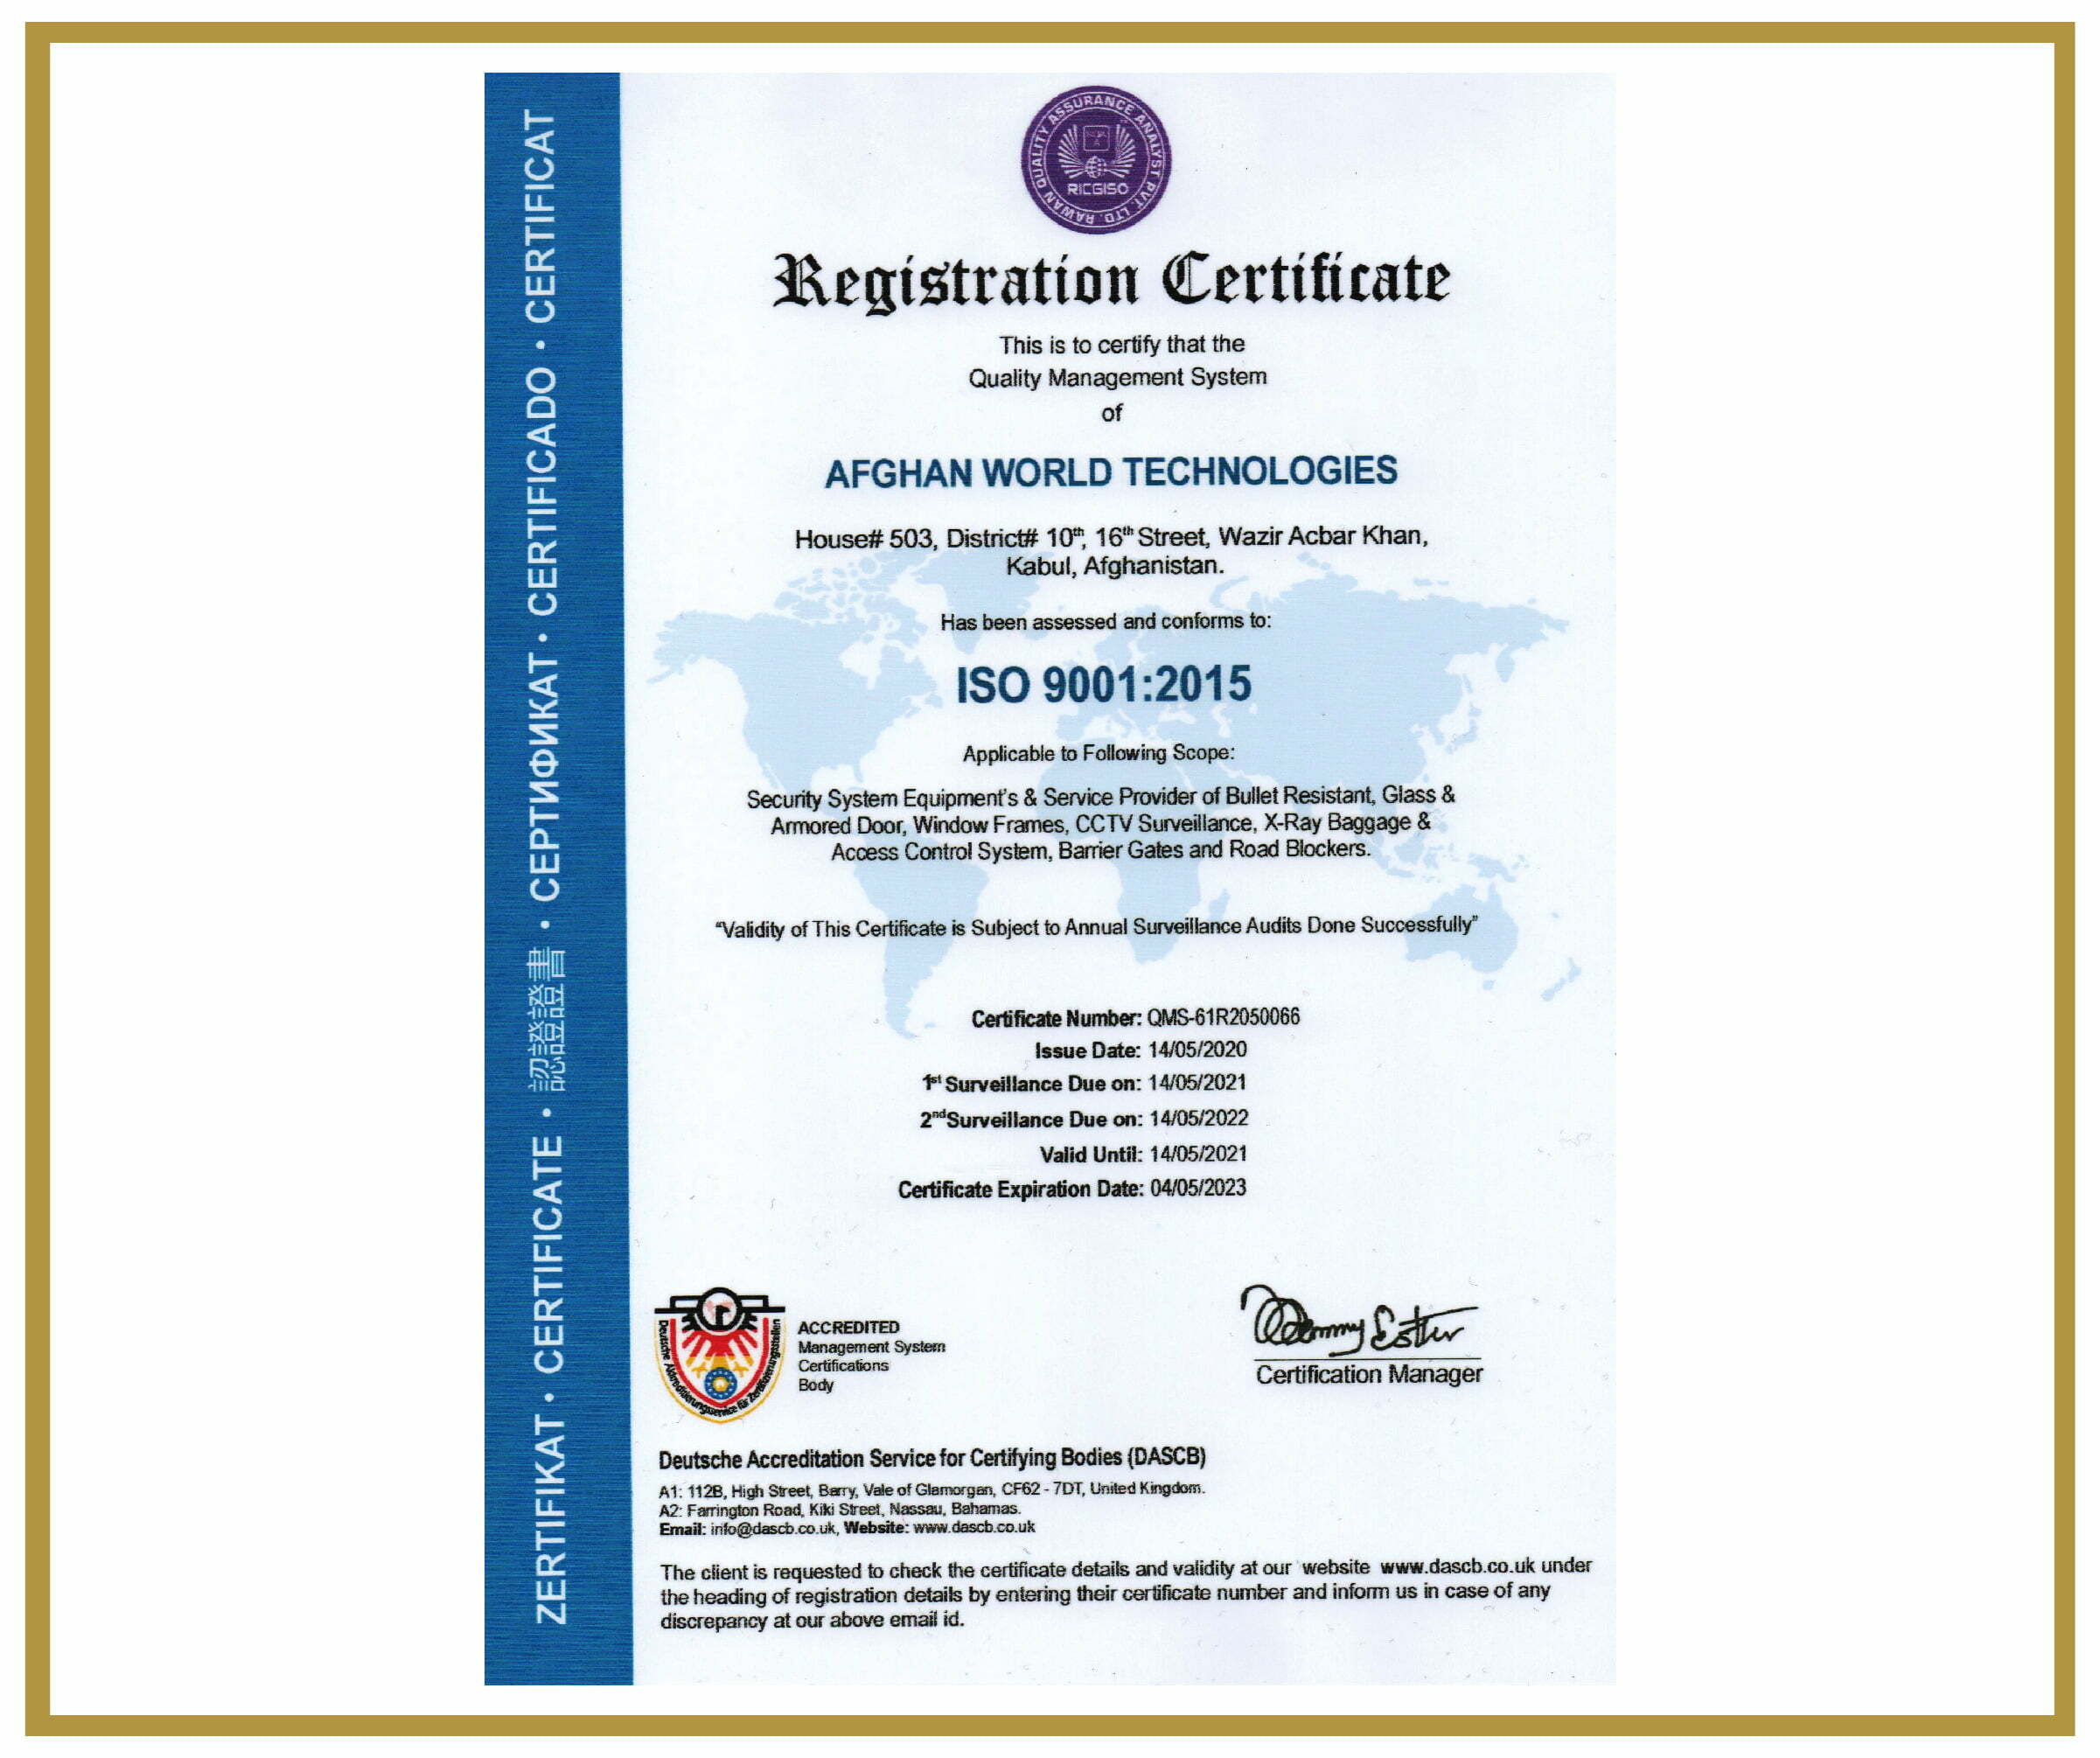 AWT-Afghan World Technologies-Certificates (1)